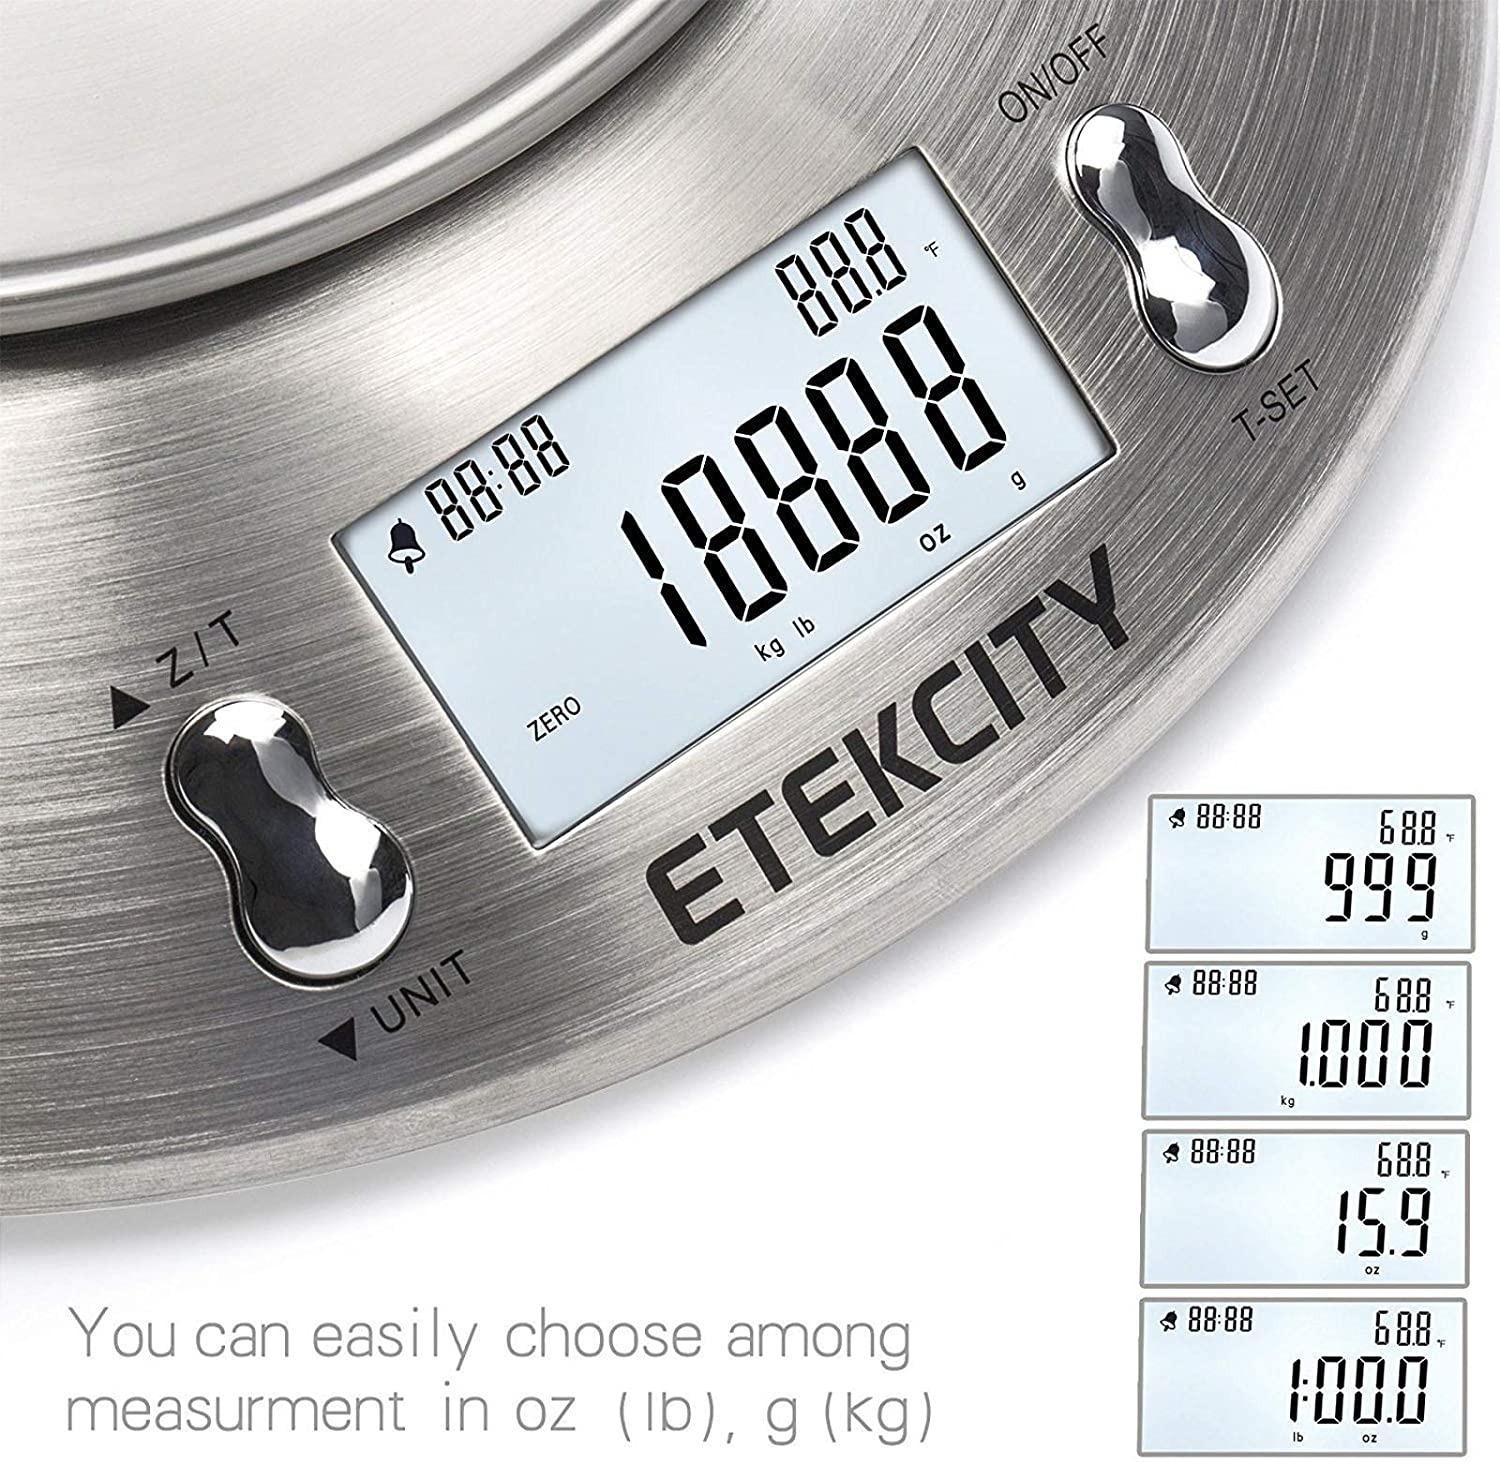 Etekcity Digital Kitchen Food Scale Stainless Steel